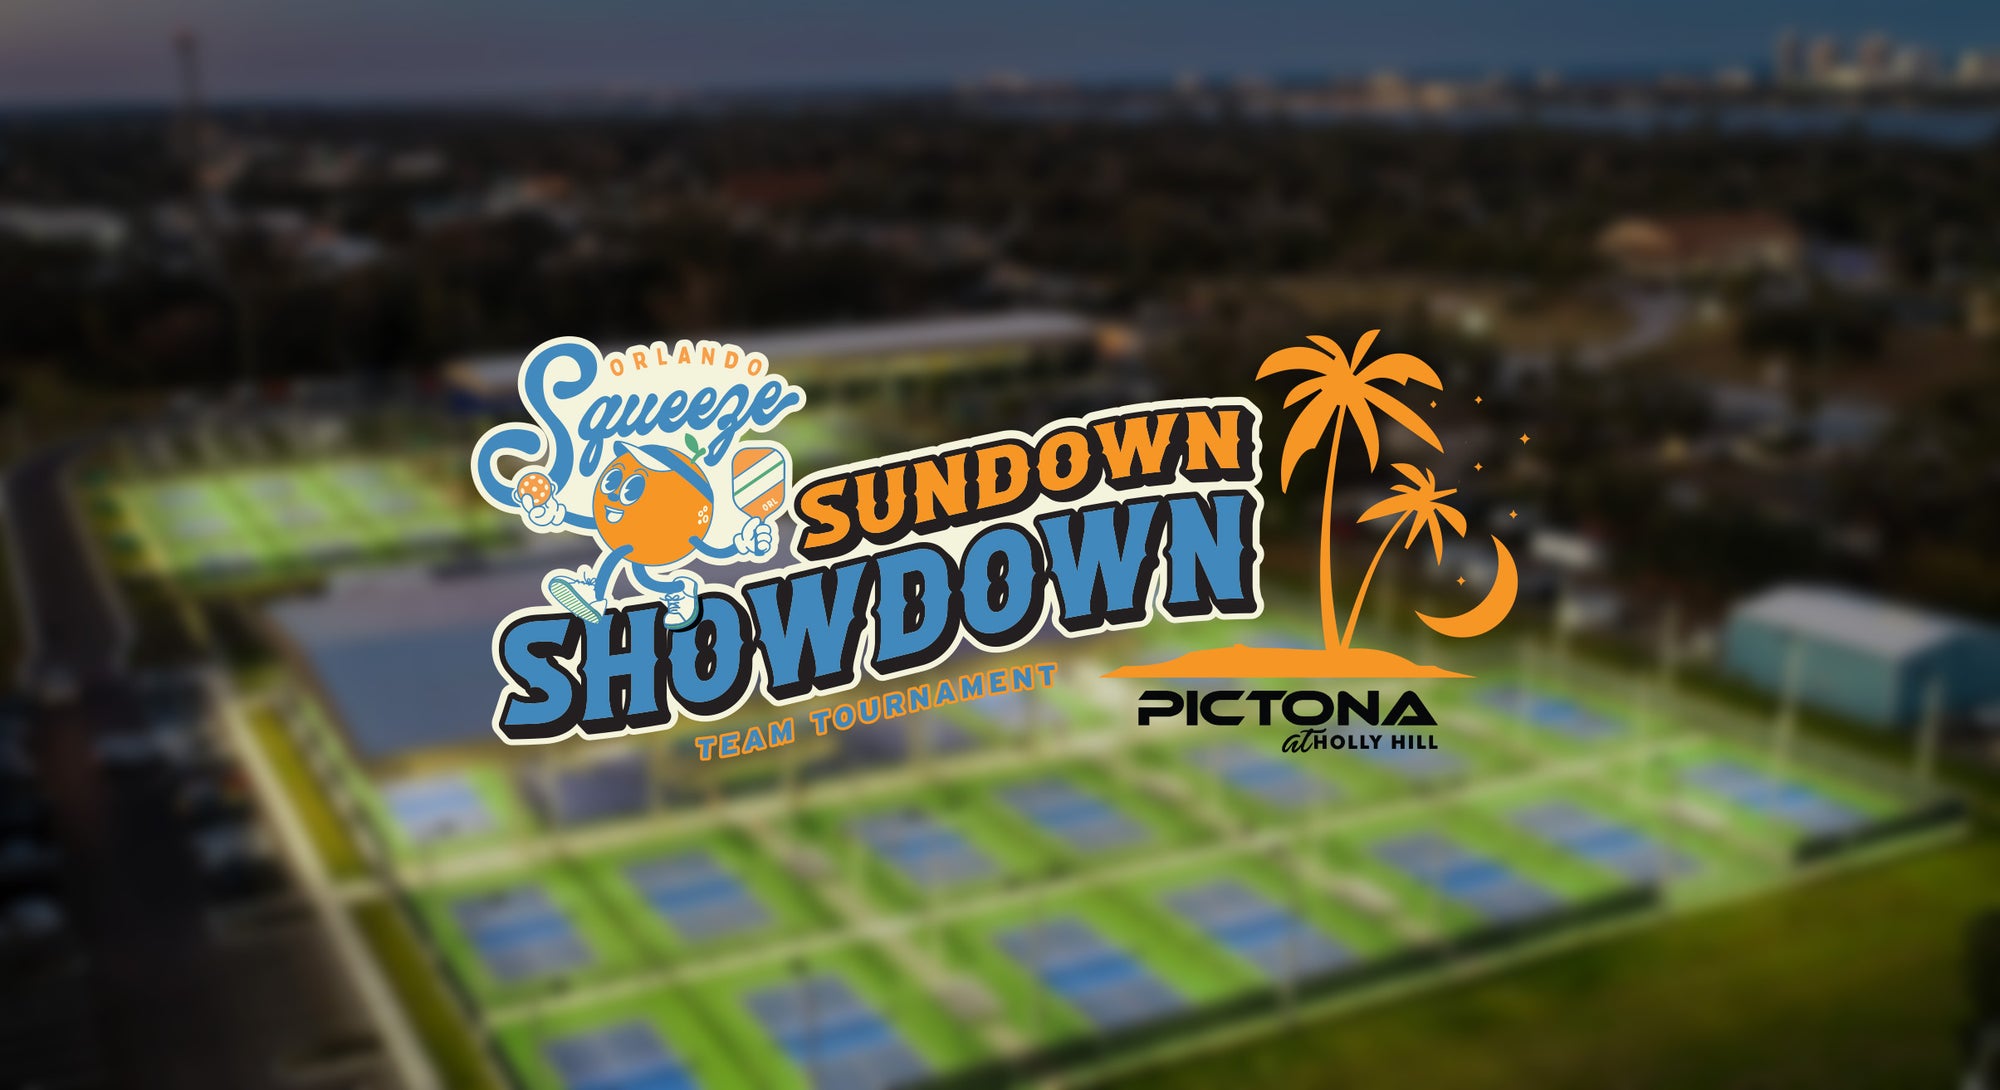 Orlando Squeeze to Sponsor Pictona’s Sundown Showdown Pickleball Tournament